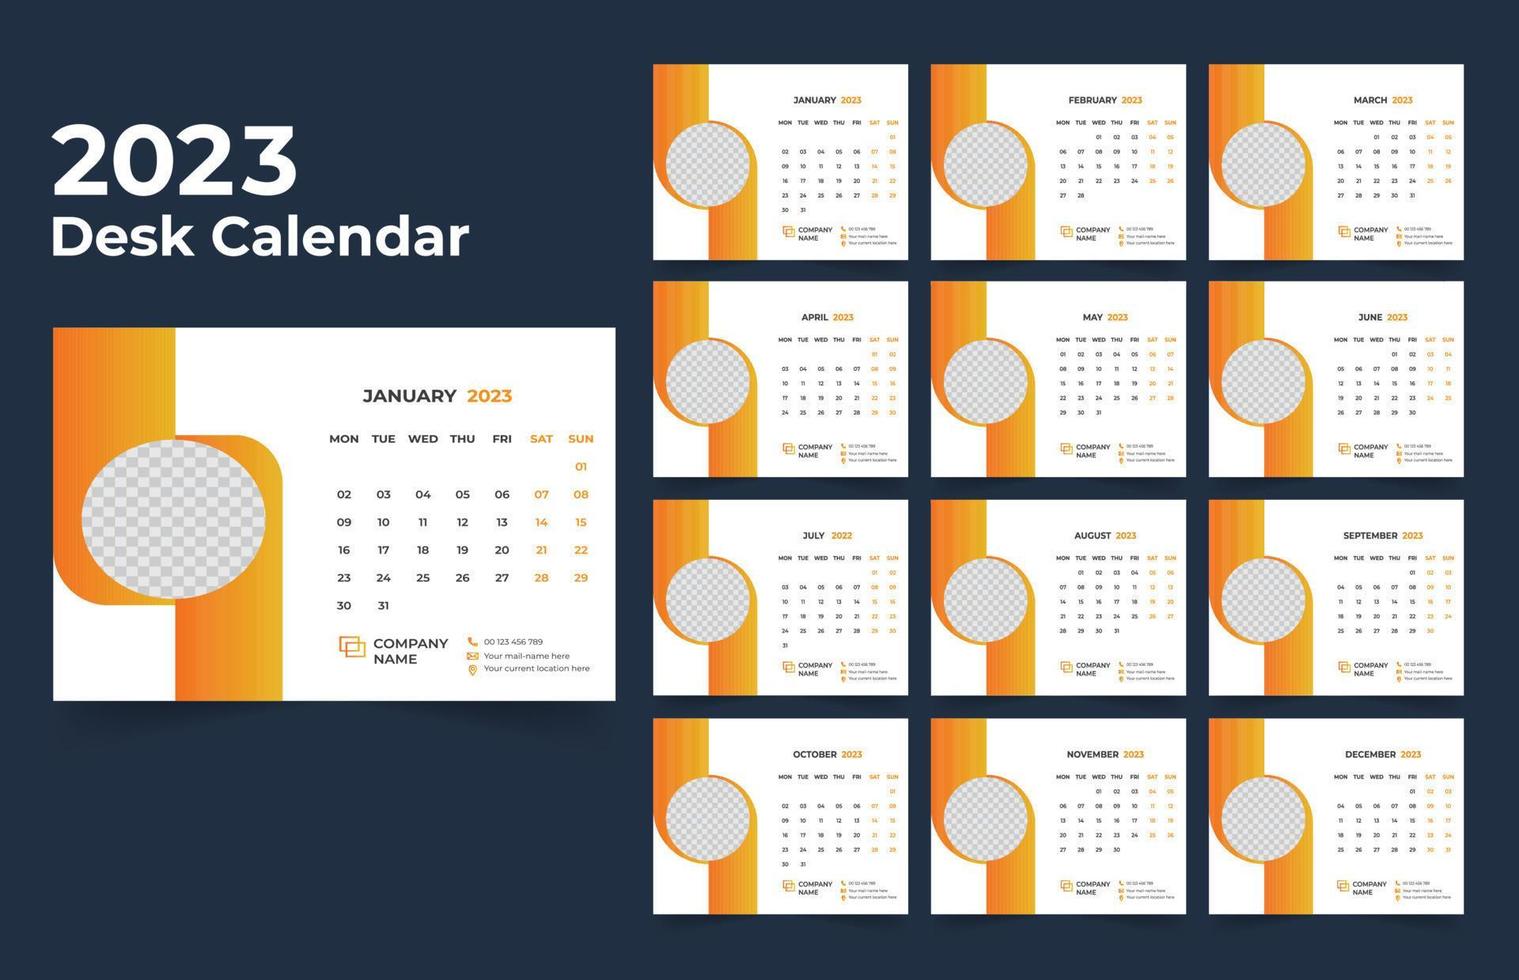 Tischkalender 2023 Vorlagendesign vektor